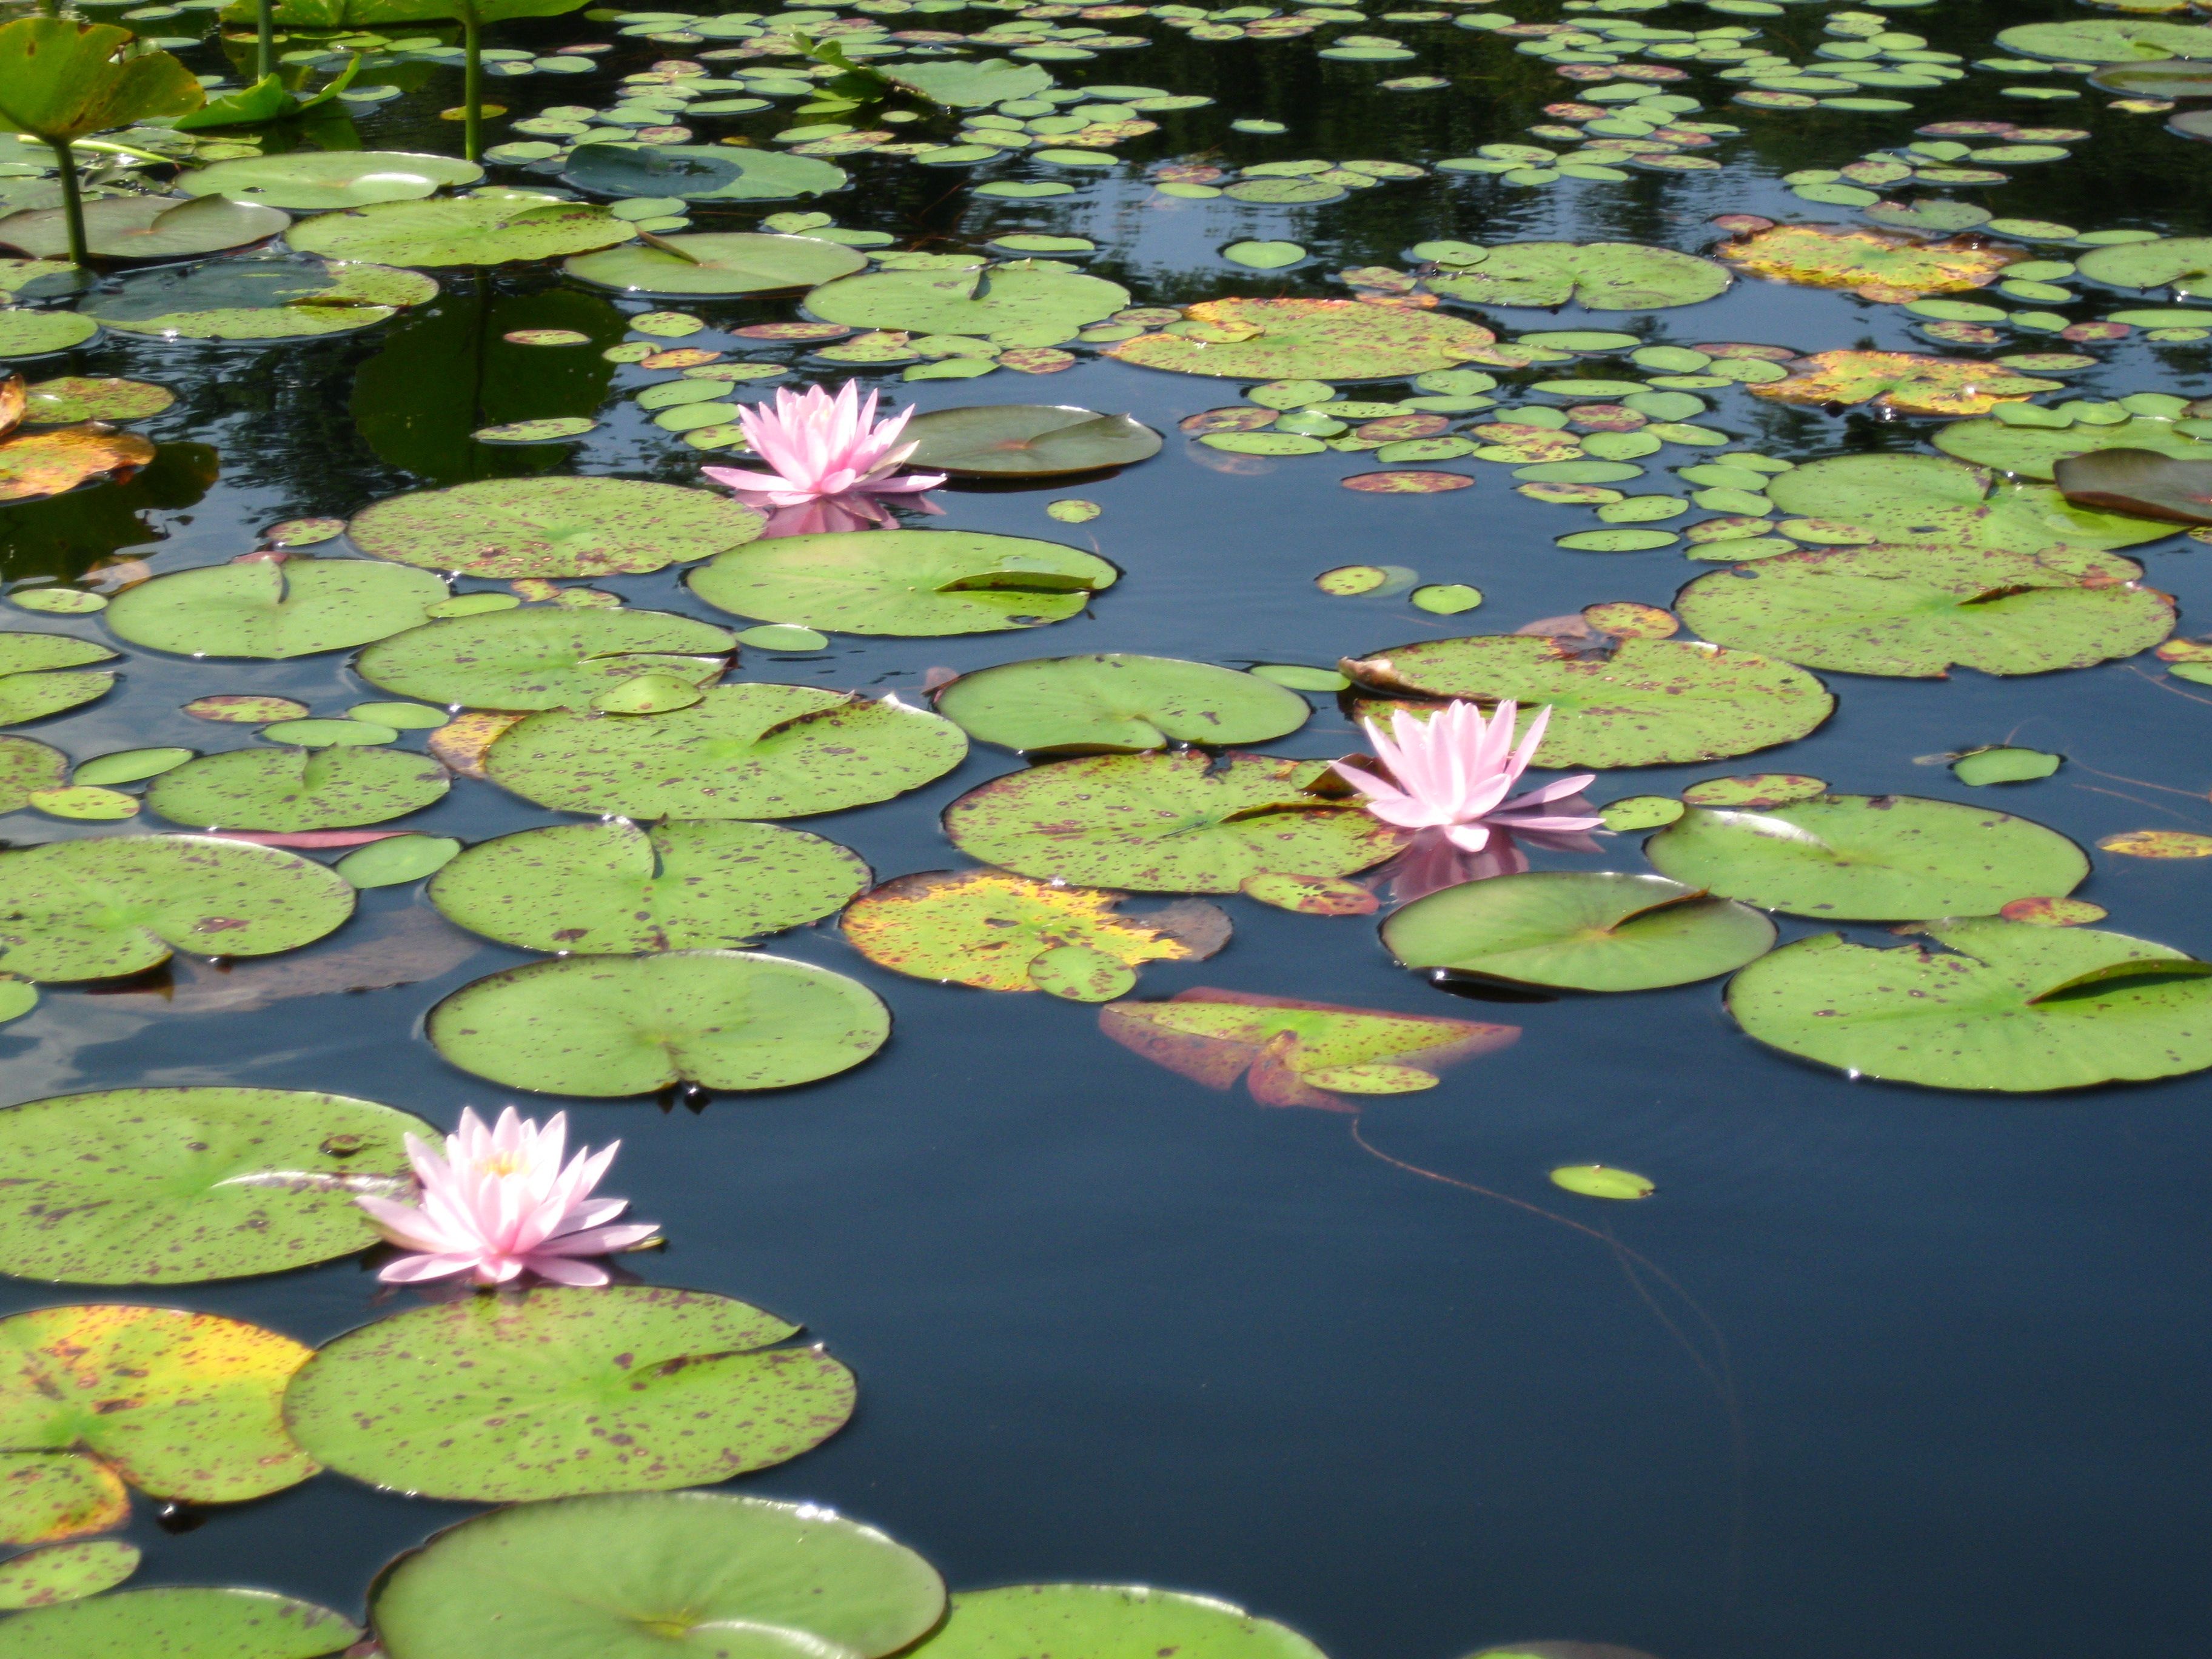 Waterlilies | Dok Hi Kim - Reflections | Pinterest